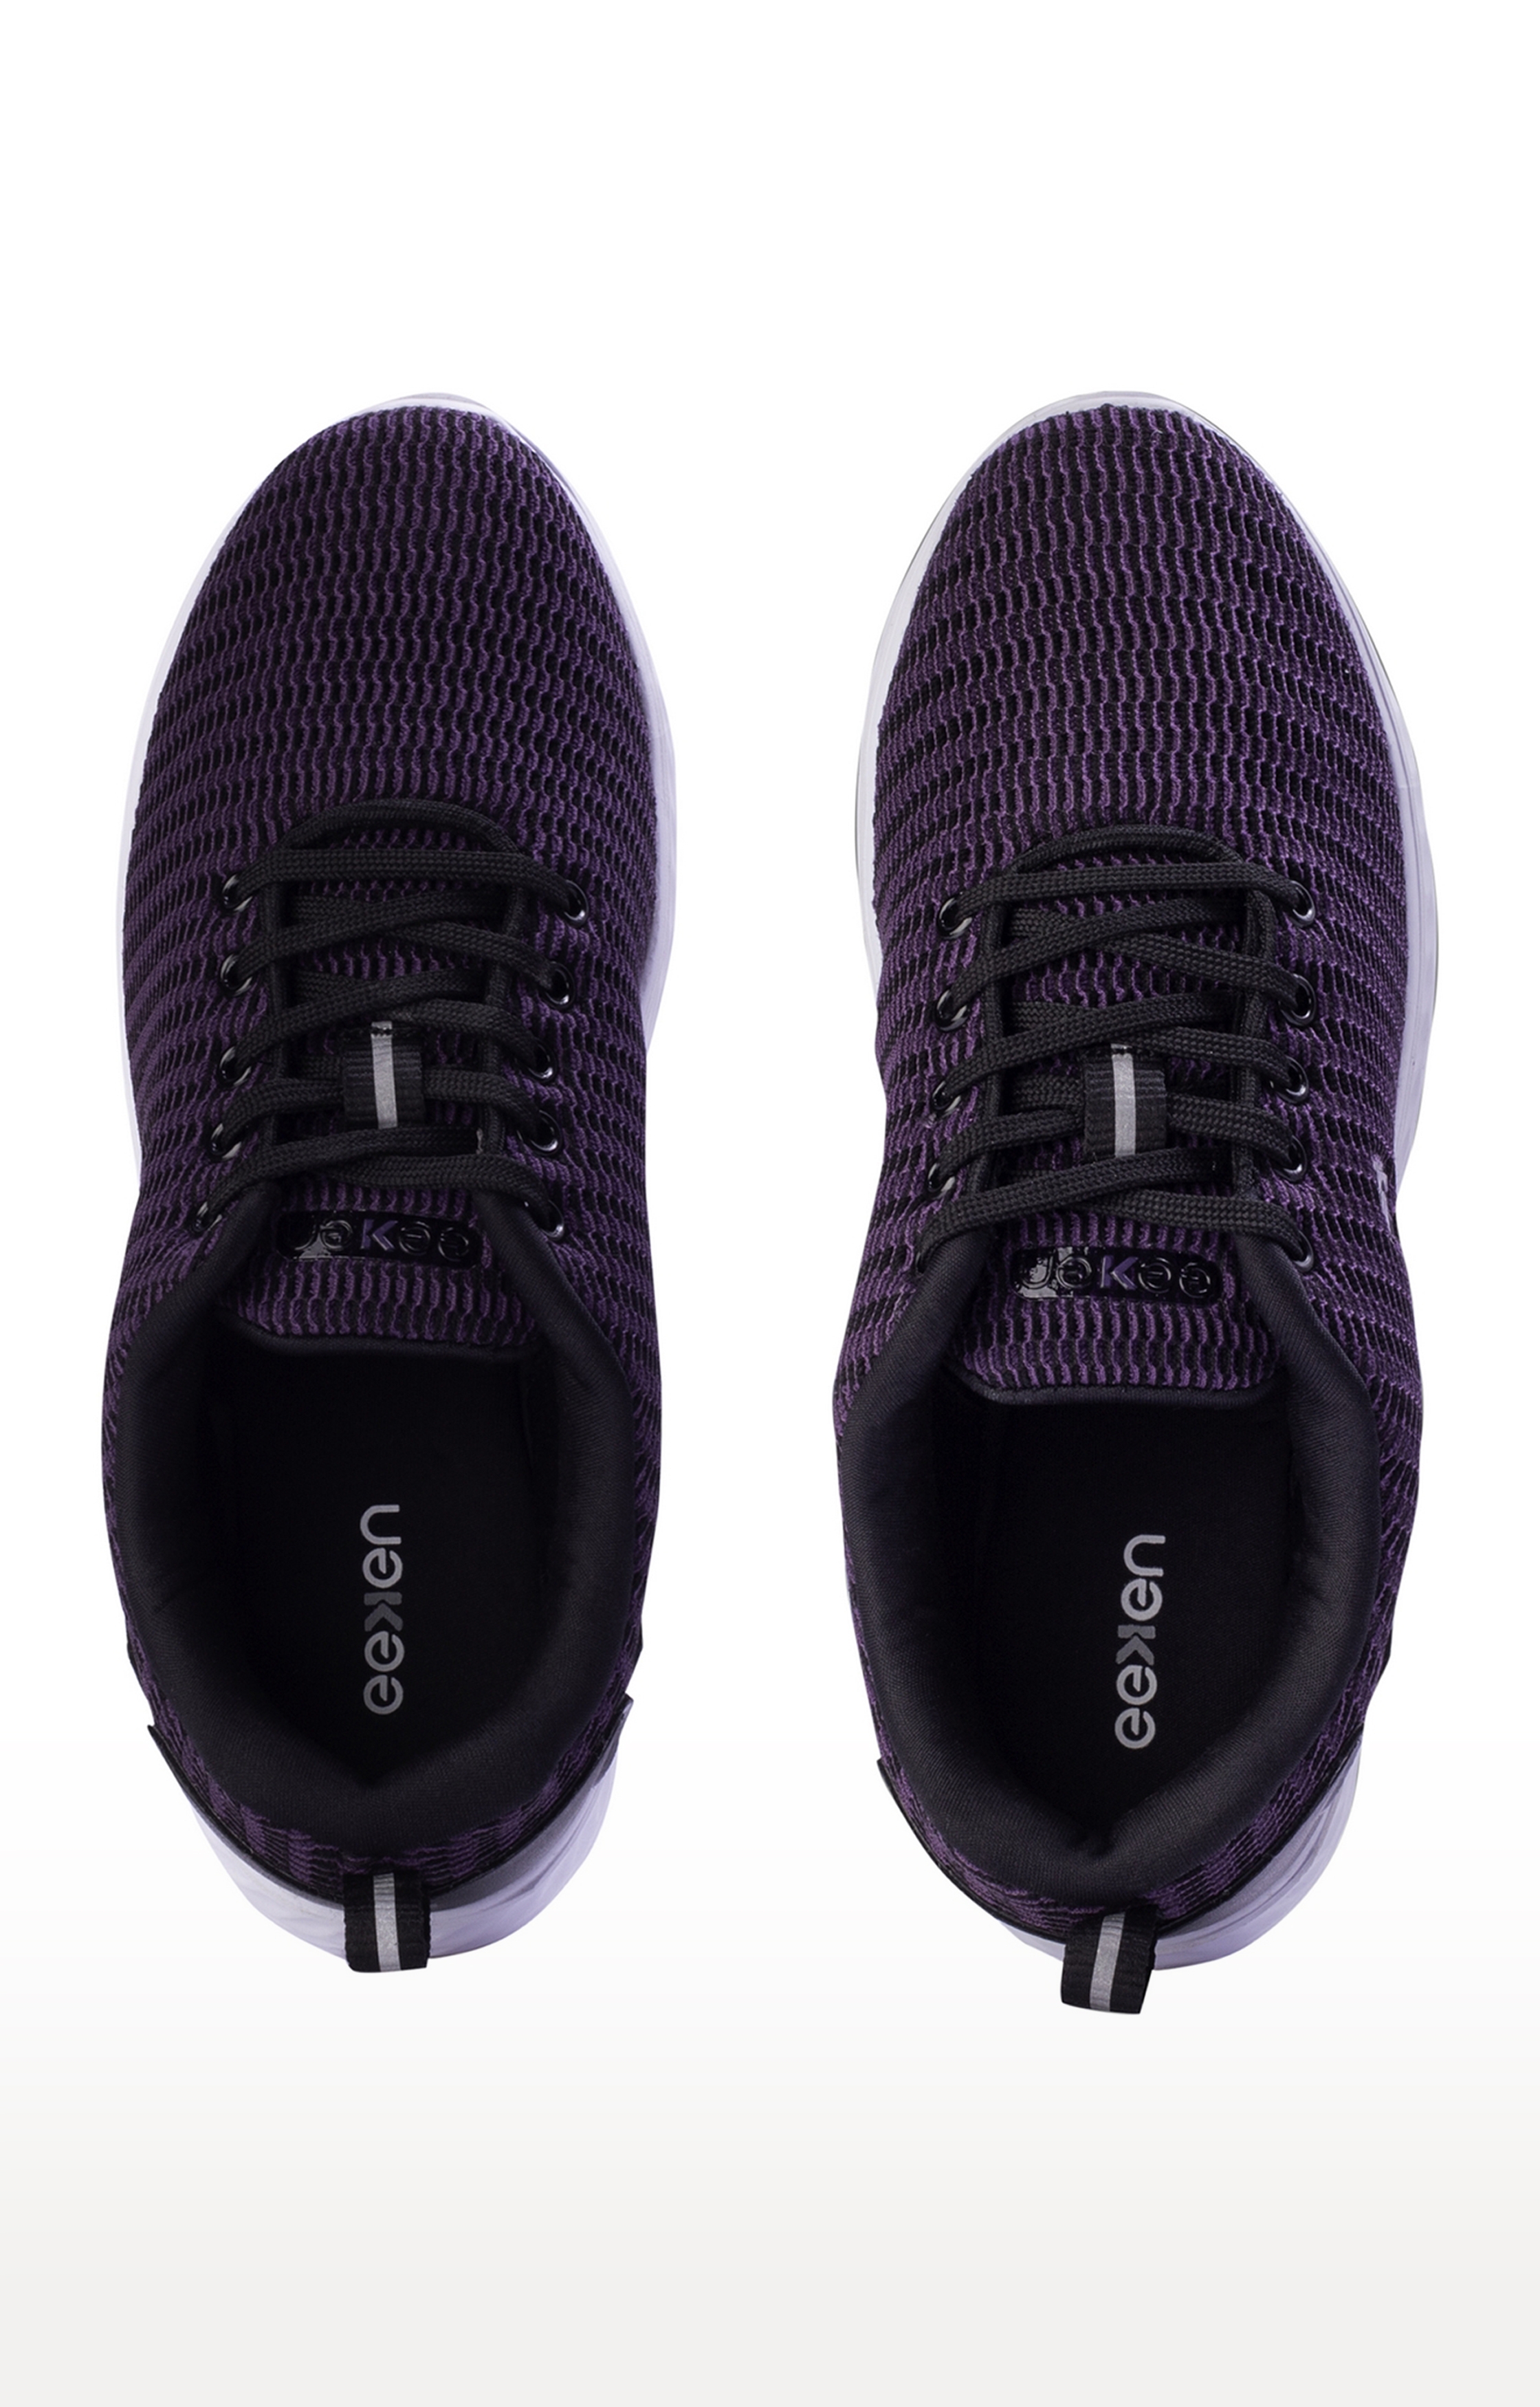 Eeken Purple Athleisure Lightweight Casual Shoes For Women 